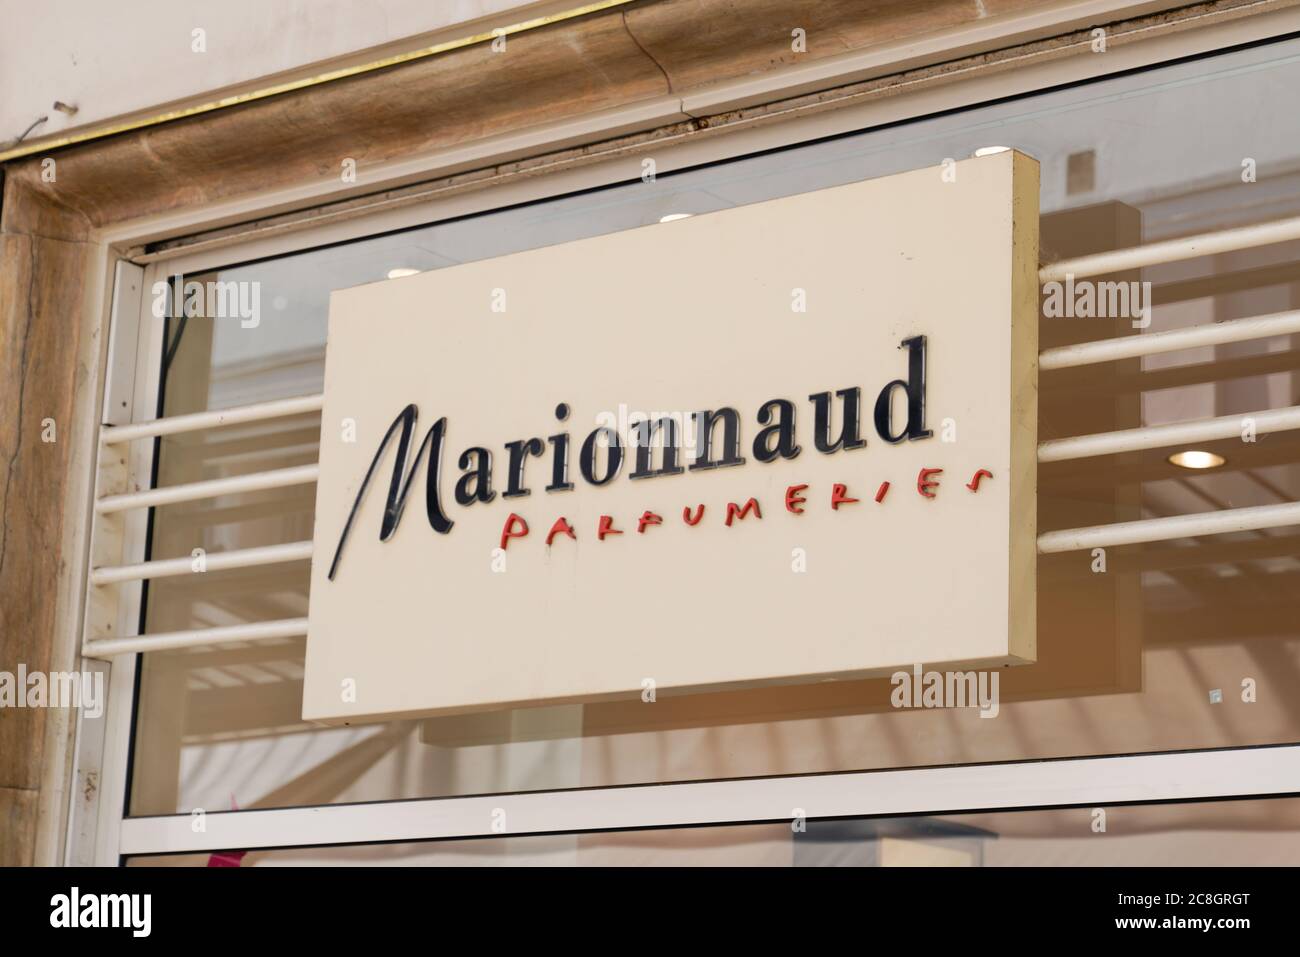 Bordeaux , Aquitaine / France - 07 22 2020 : Marionnaud logo and text ...